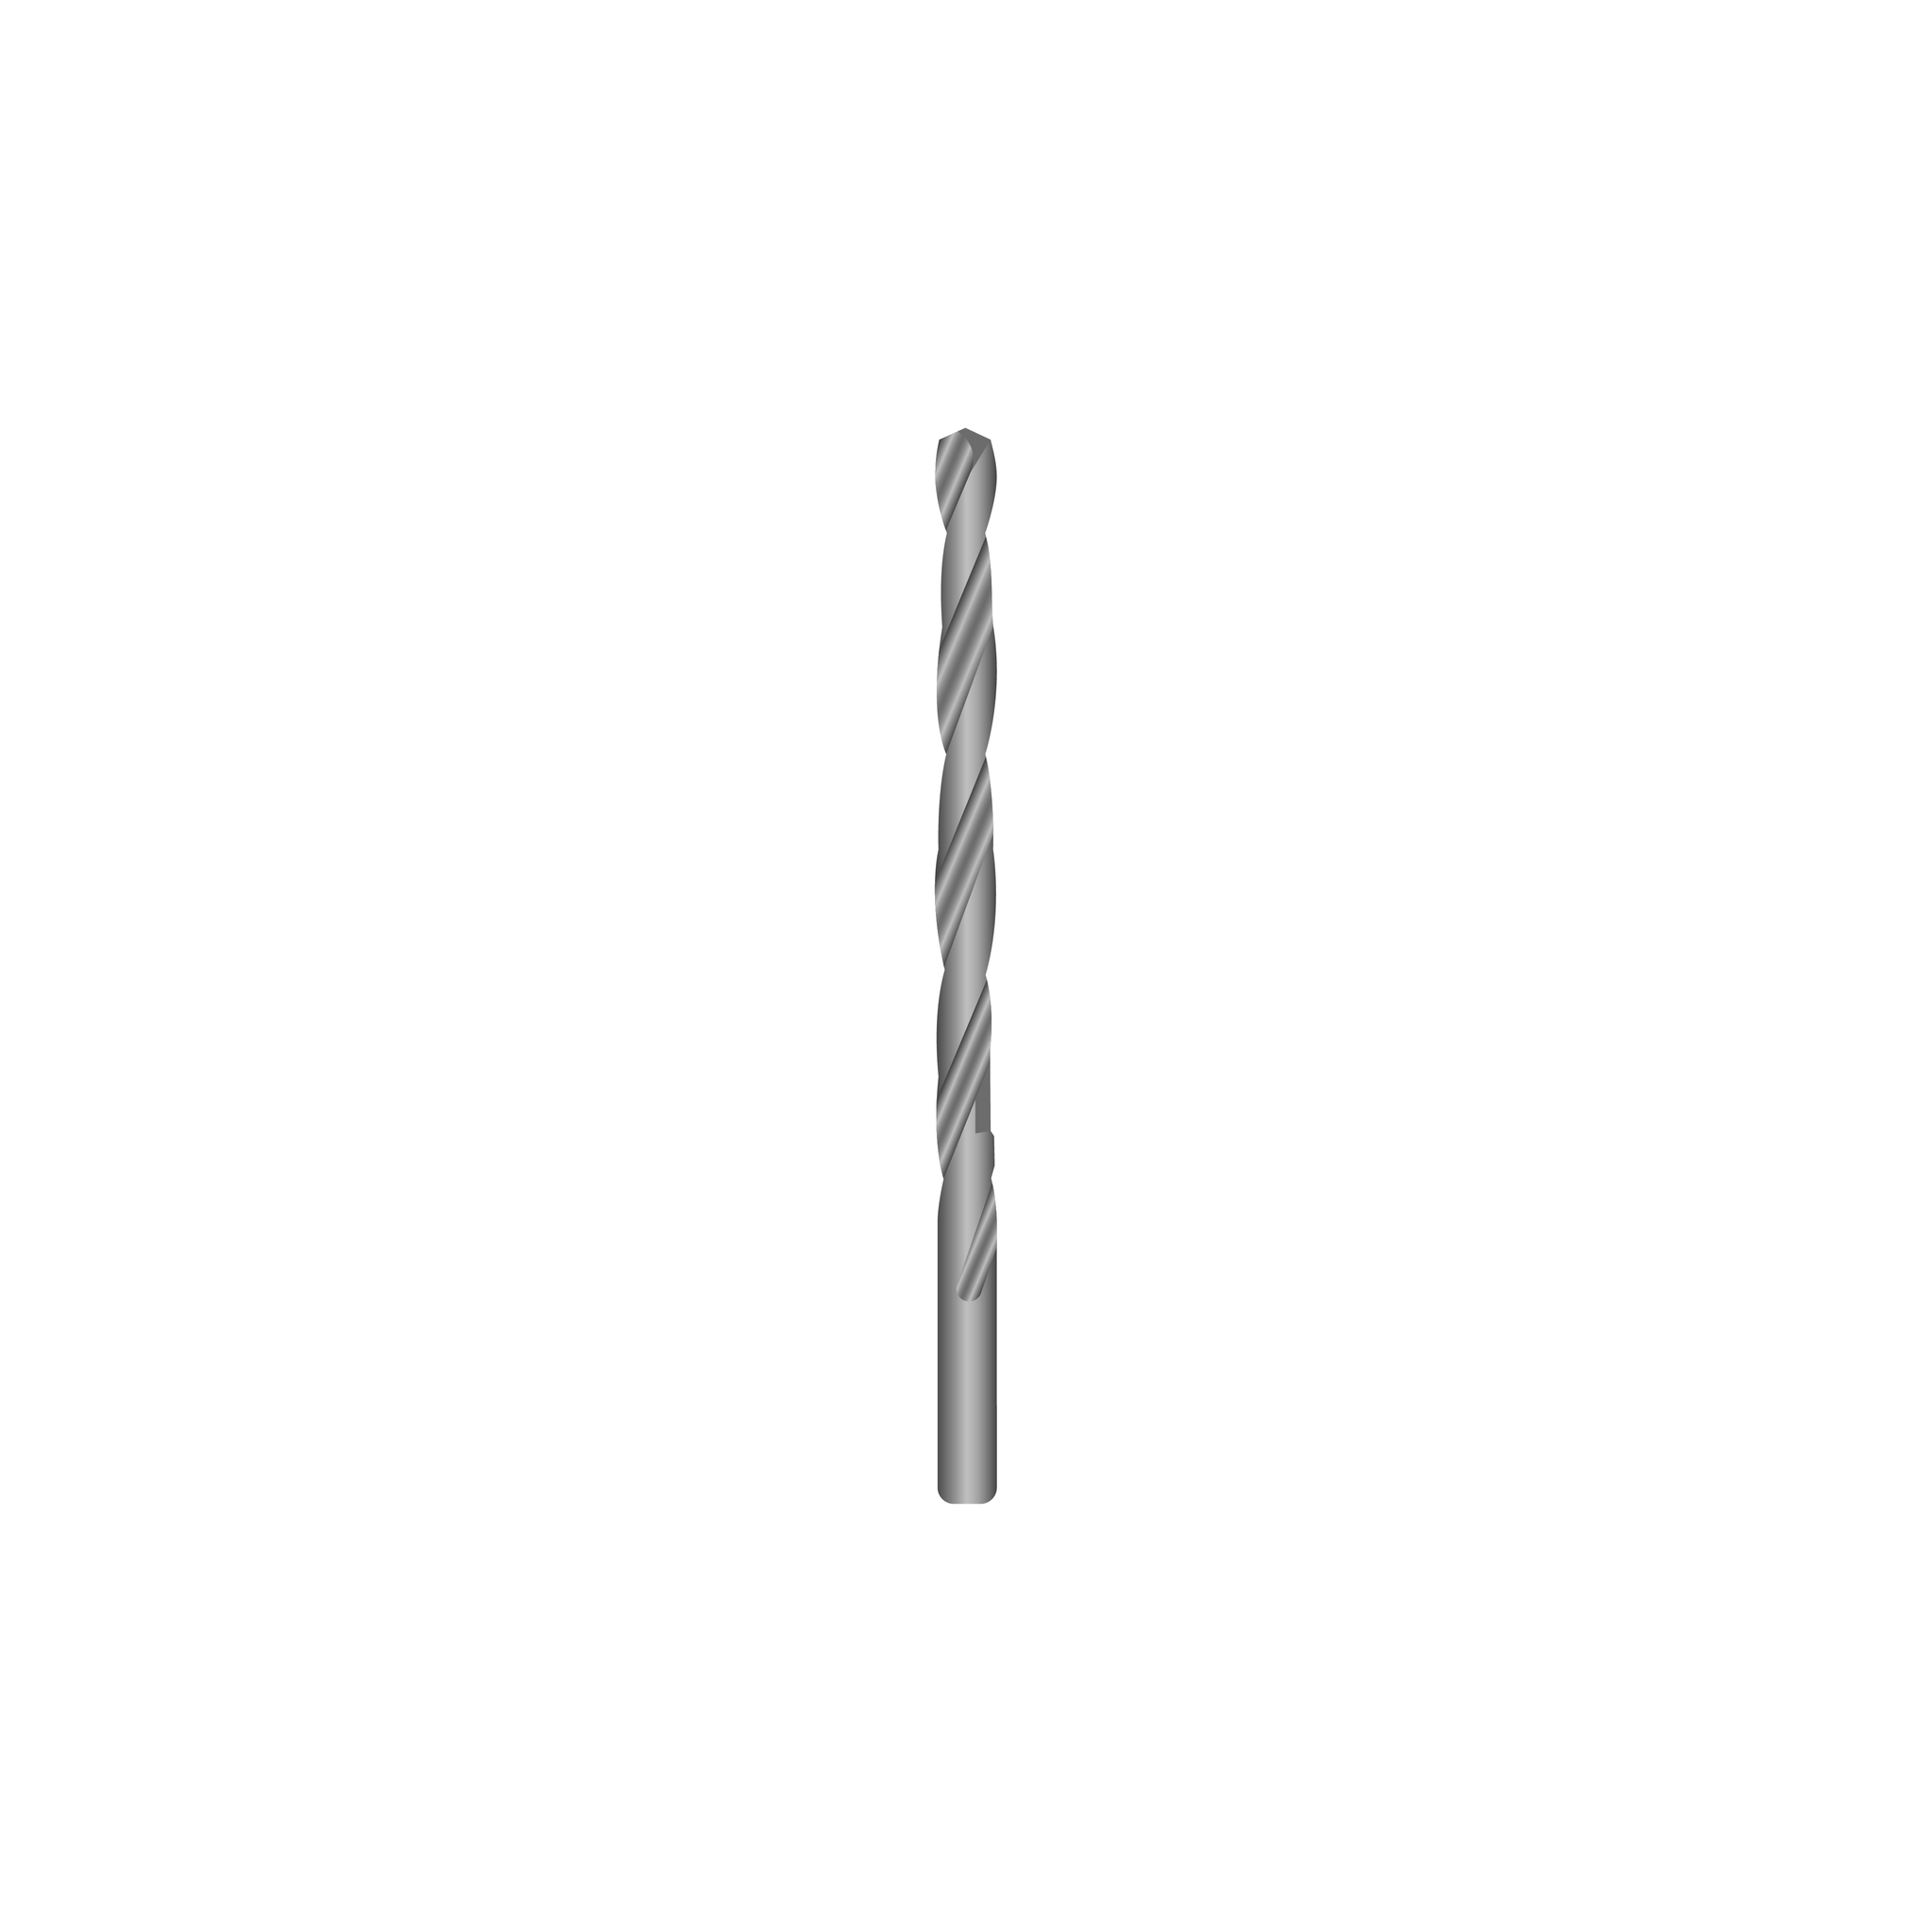 A singular silver metal drill shown vertically.